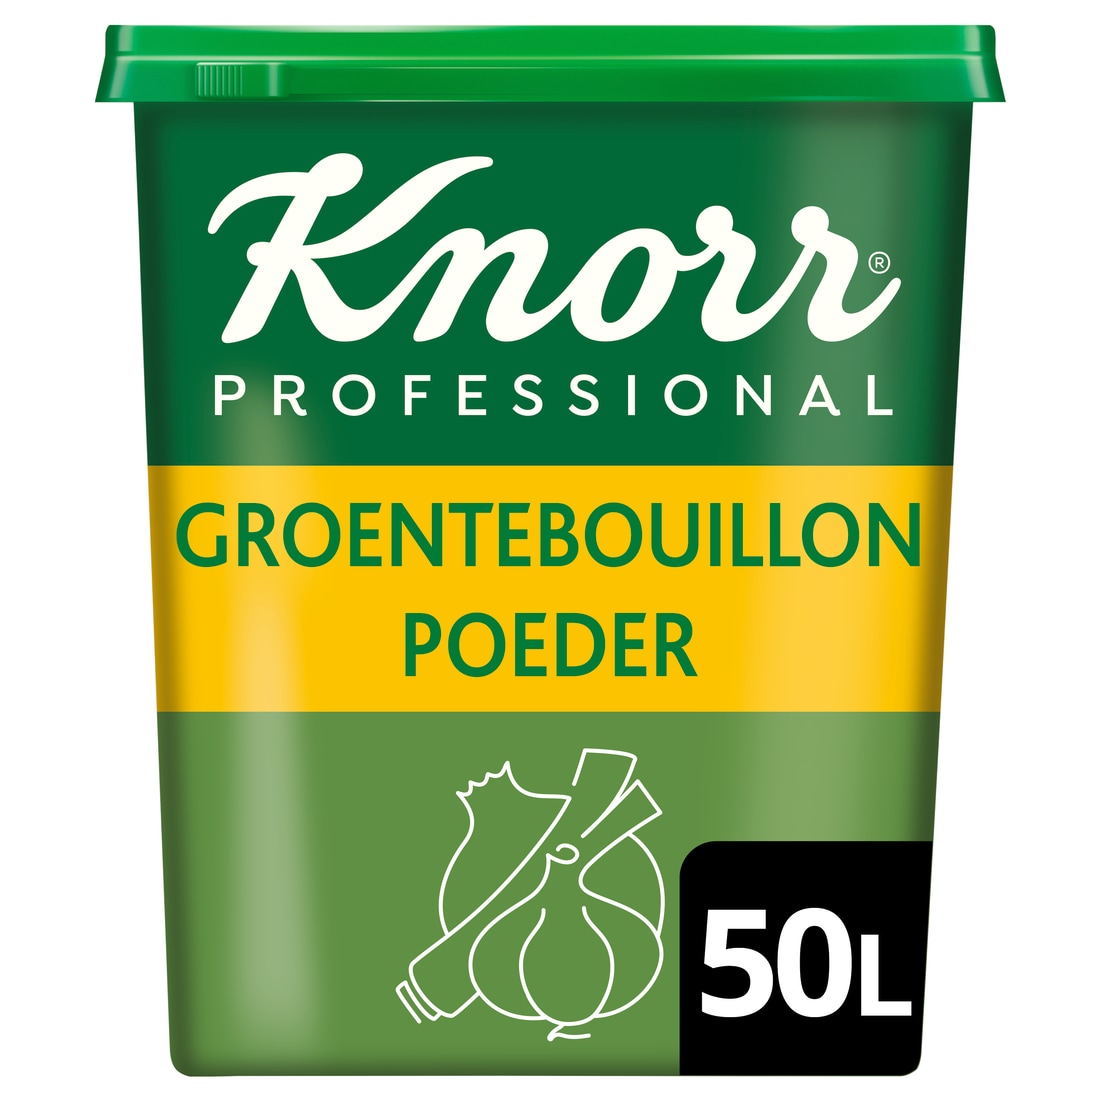 Knorr Professional Groentebouillon poeder krachtig 50L - 